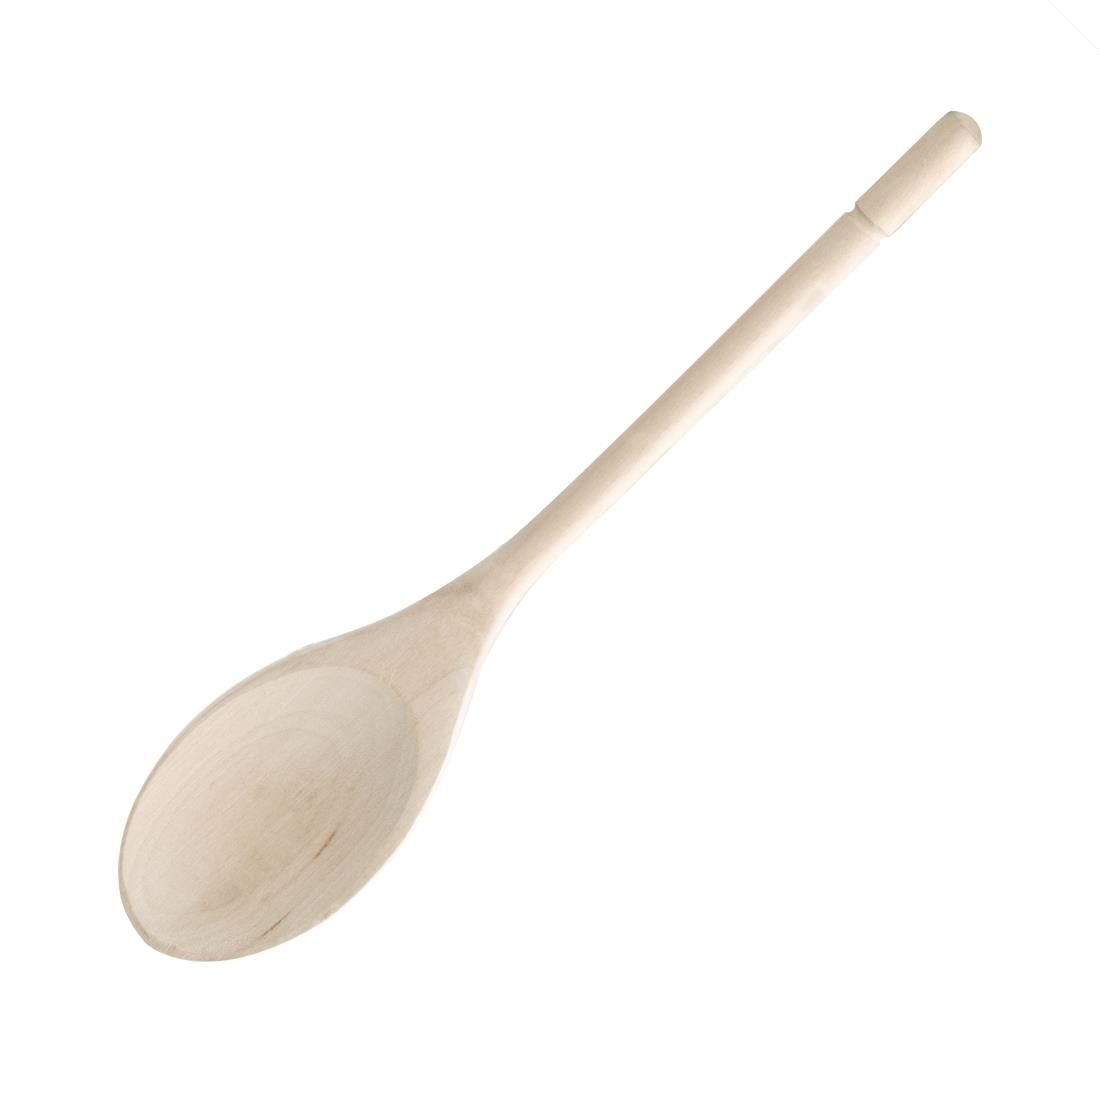 D649 Vogue Wooden Spoon 10"